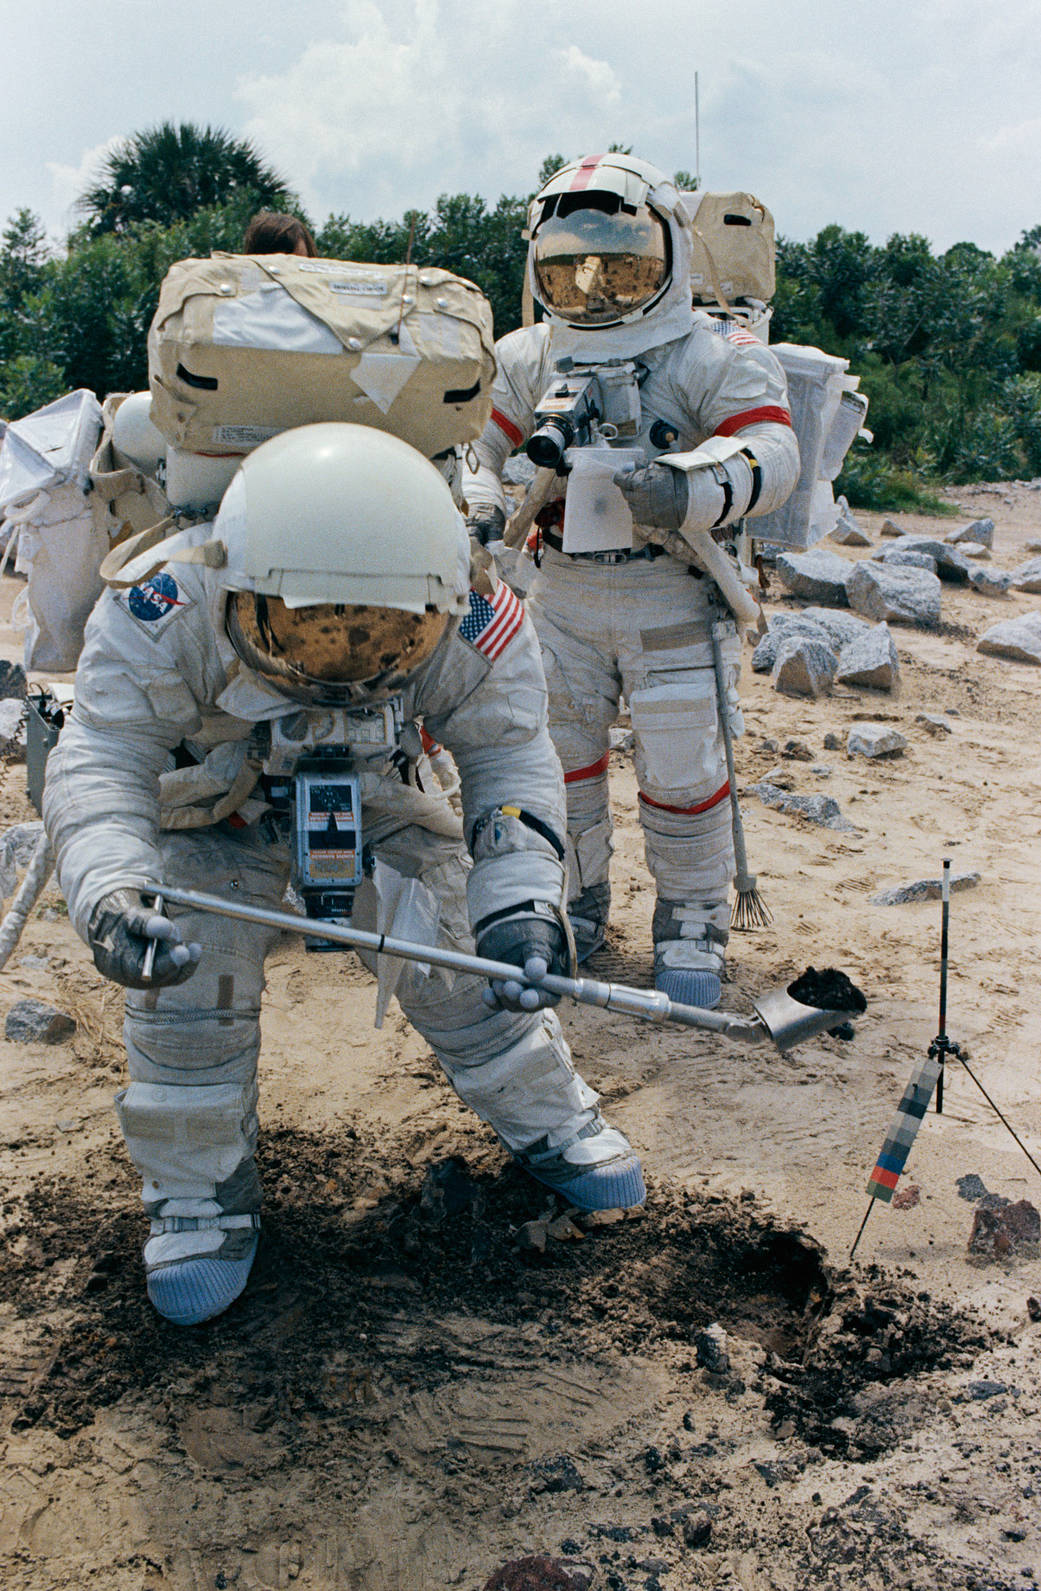 Training for a Lunar Mission